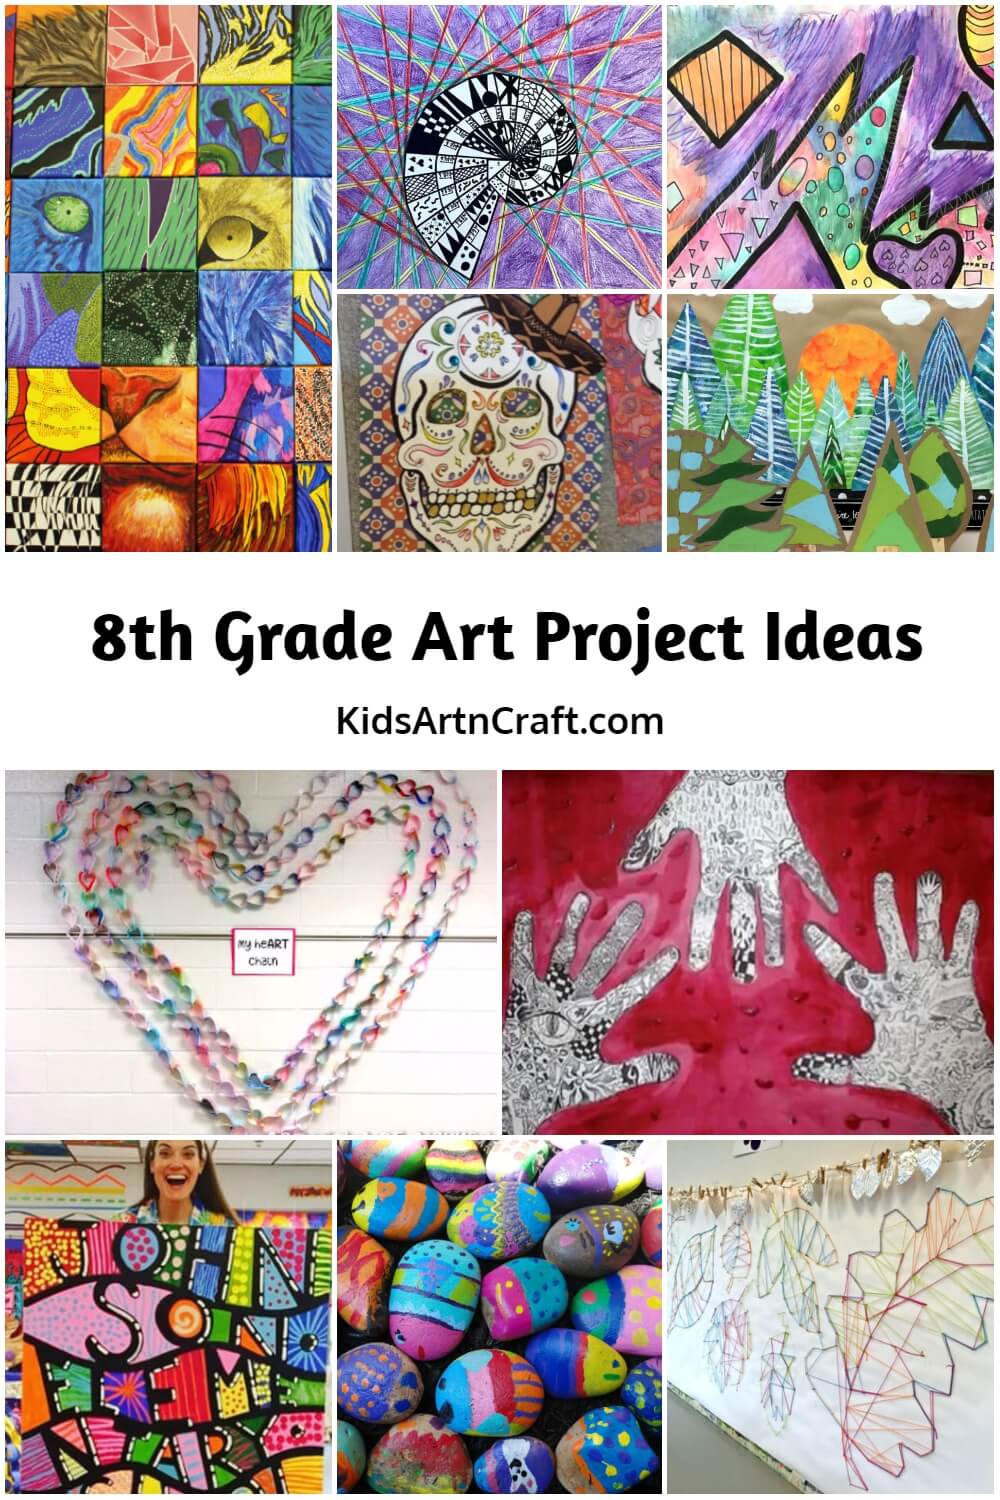 8th Grade Art Project Ideas